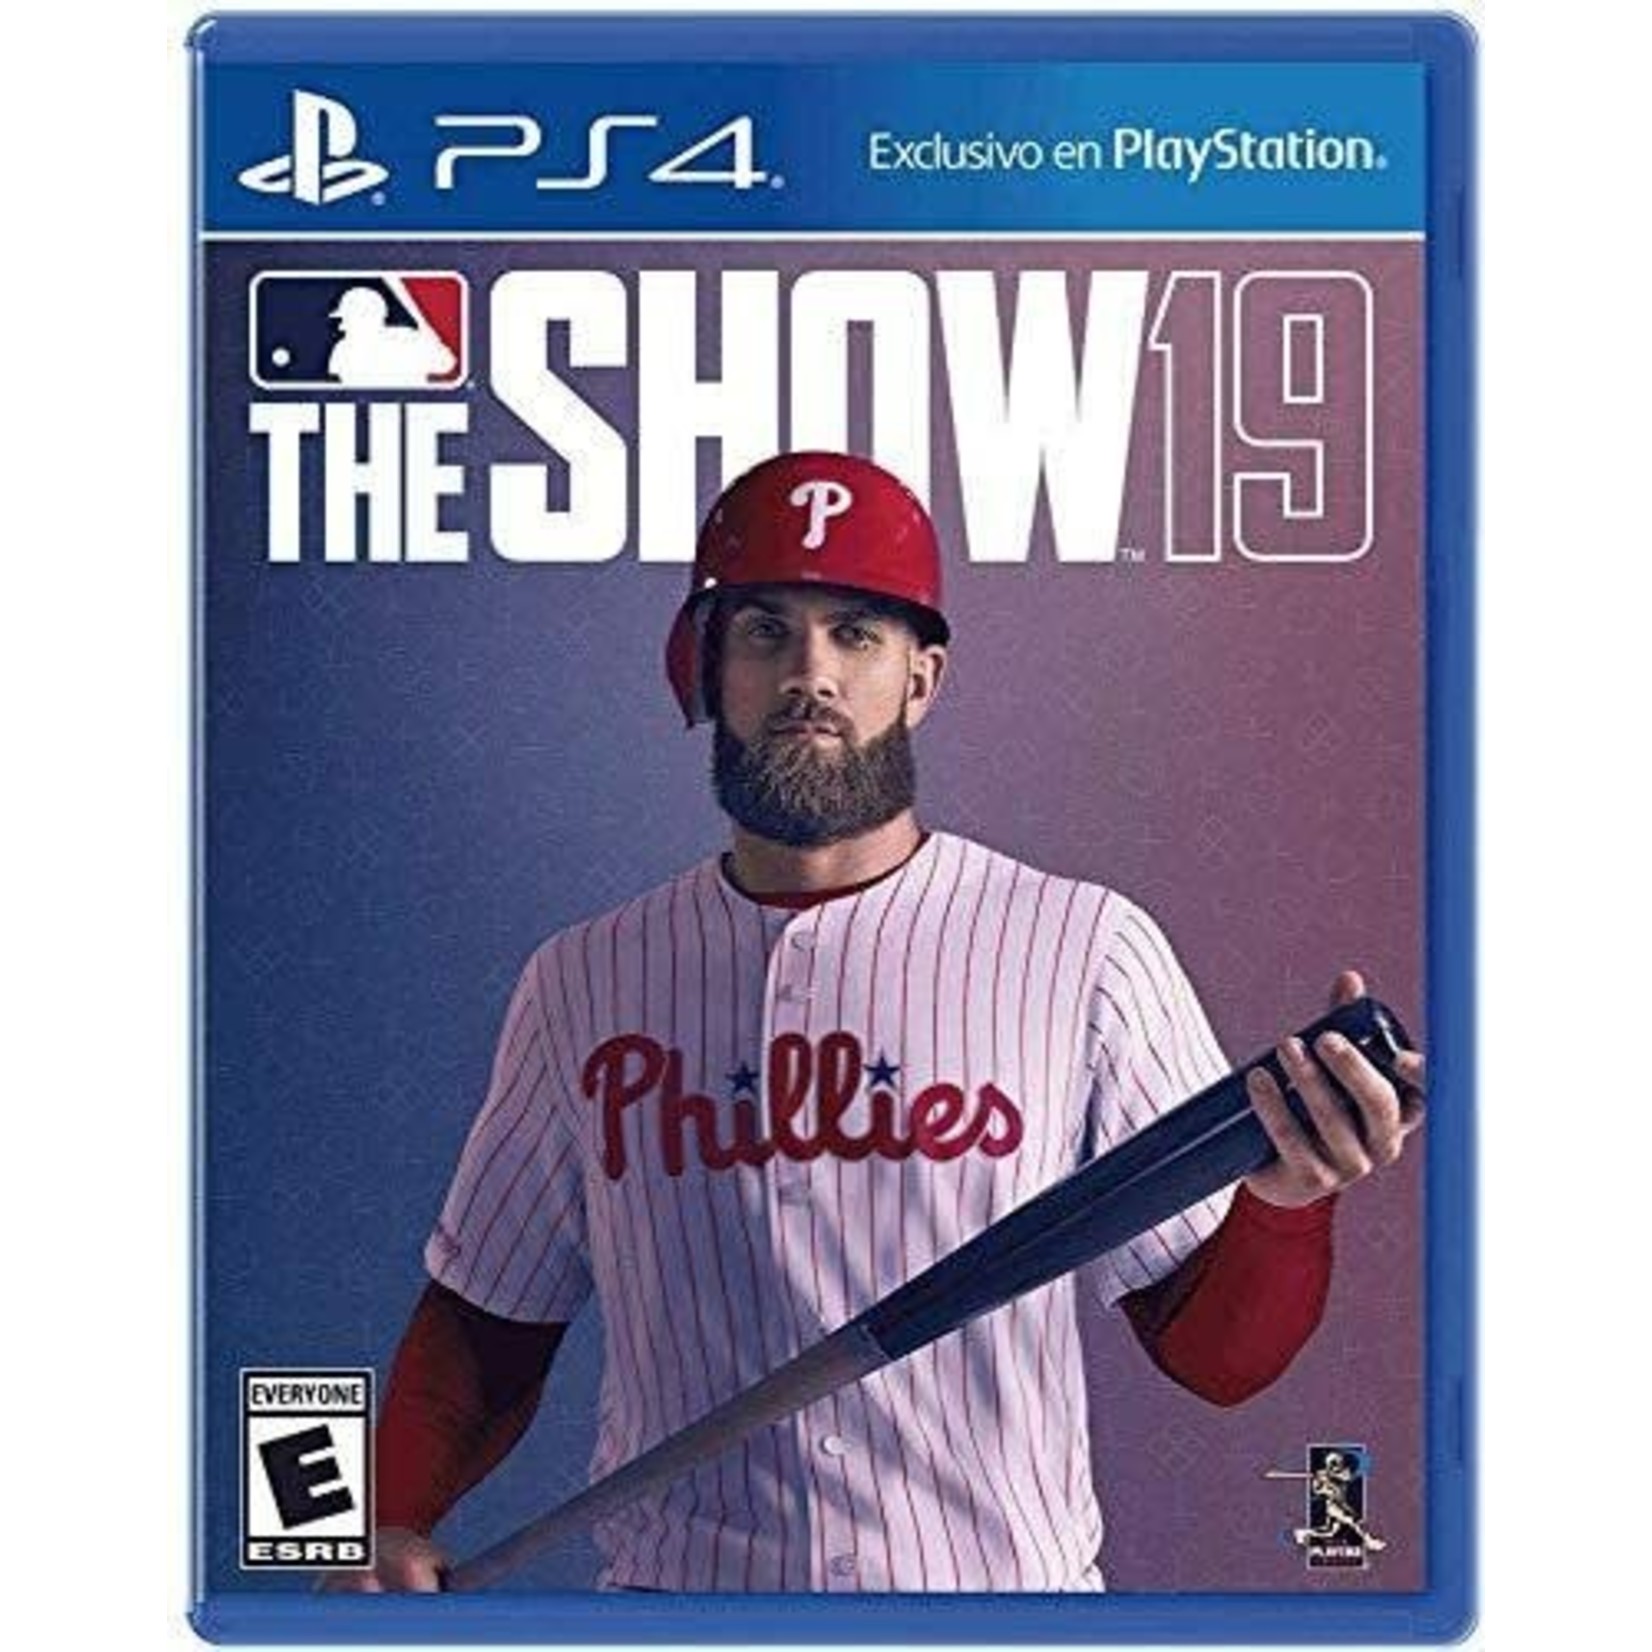 PS4U-MLB The Show 19